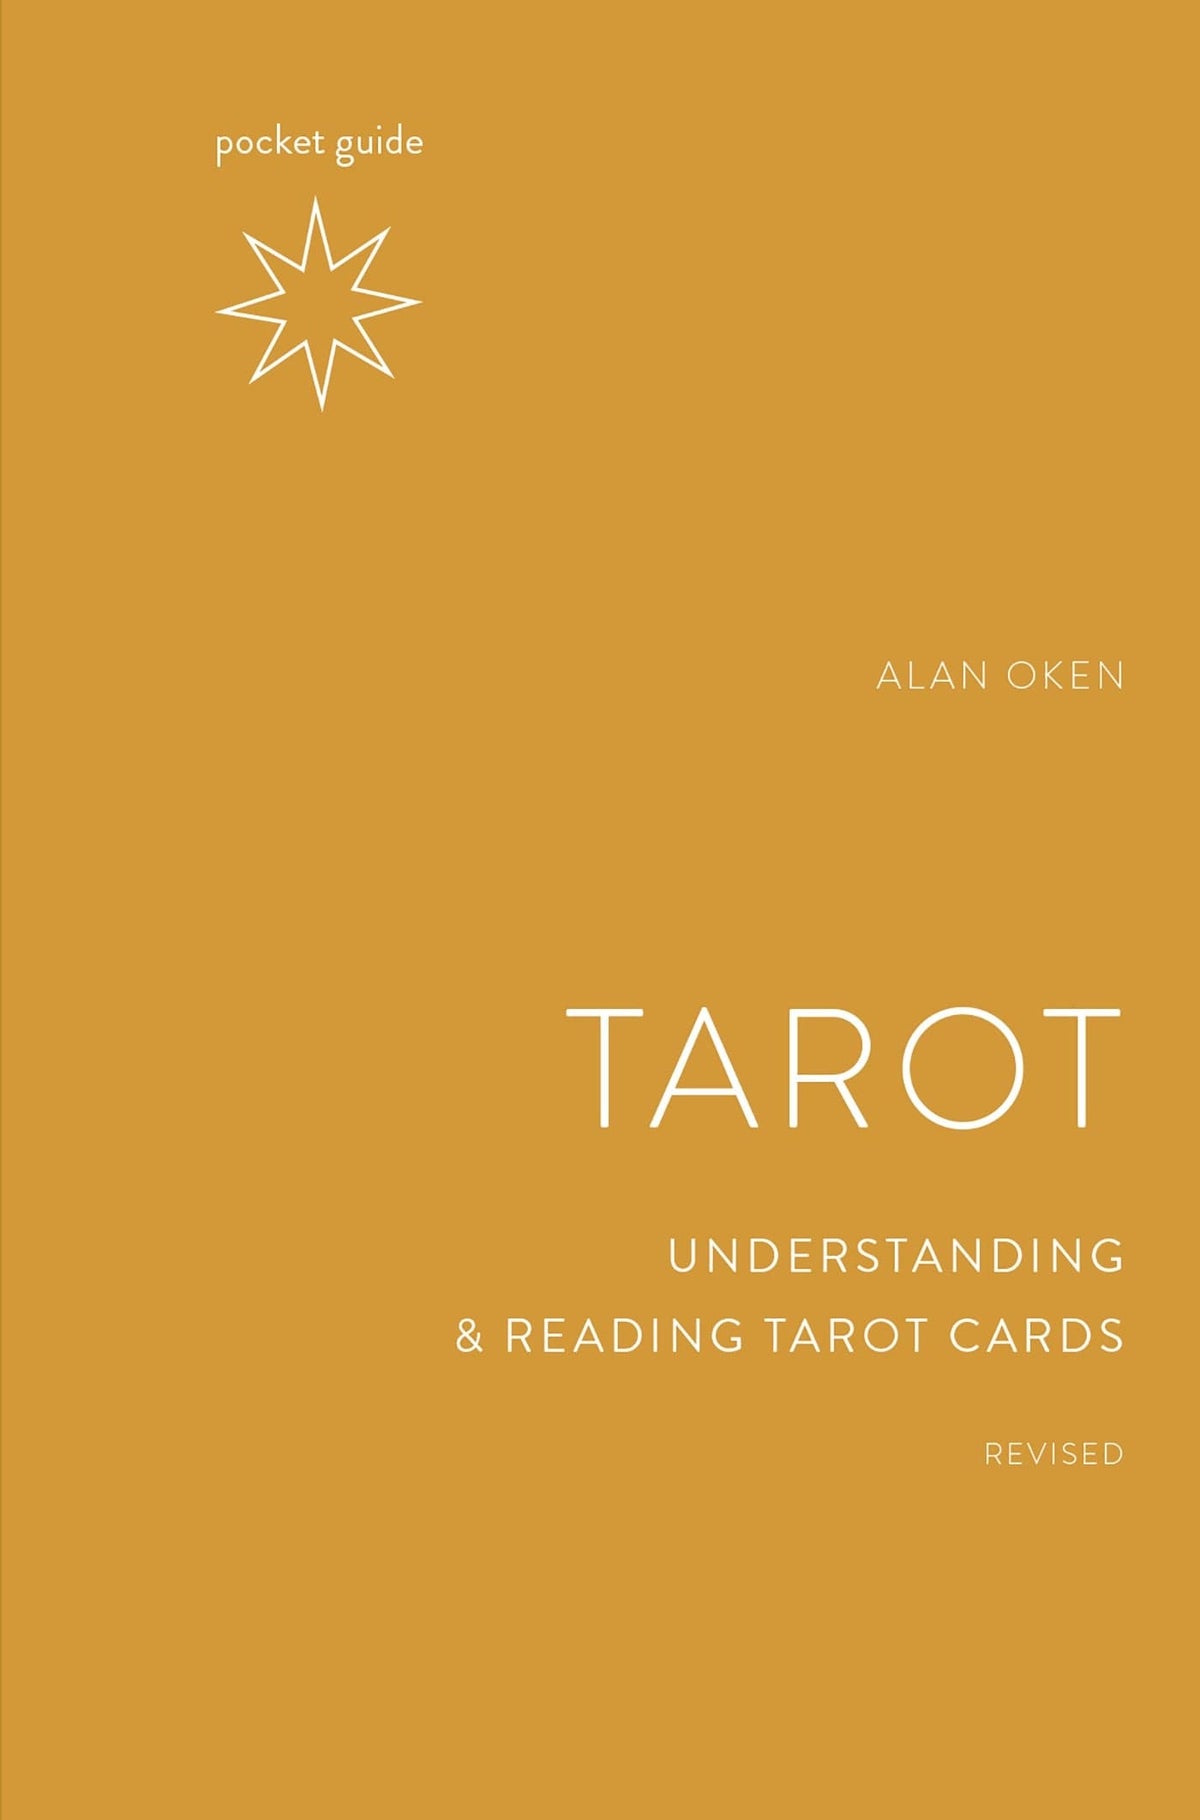 Penguin Random House Pocket Guide to the Tarot, Revised